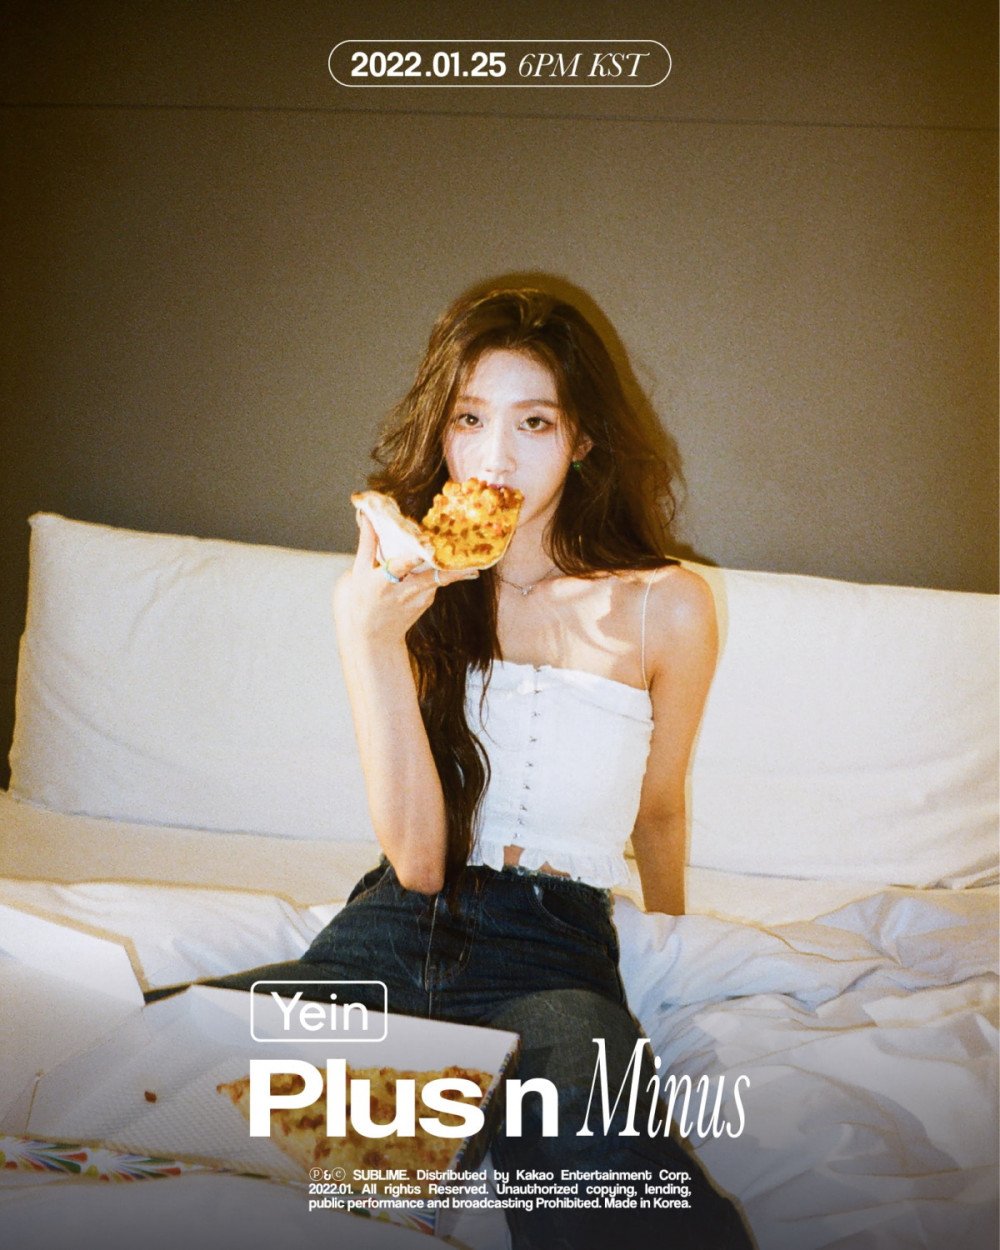 [Дебют] ЕИн из Lovelyz сингл «Plus N Minus»: музыкальный клип